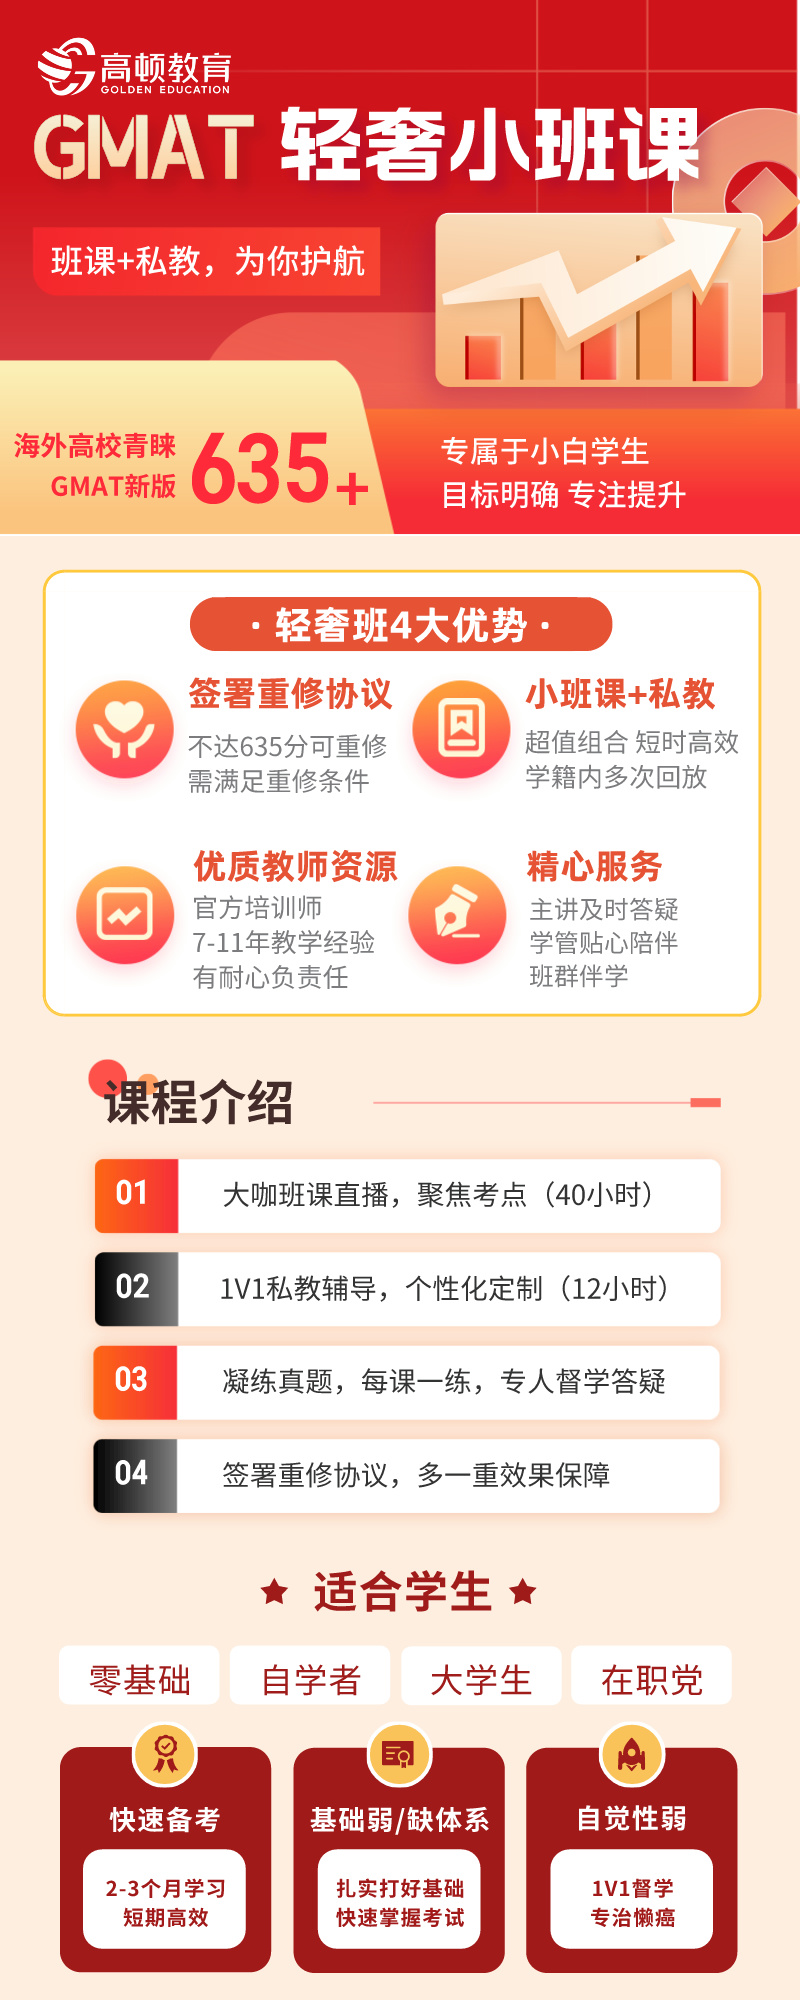 https://simg01.gaodunwangxiao.com/uploadfiles/product-center/202403/29/c18d1_20240329160012.jpg